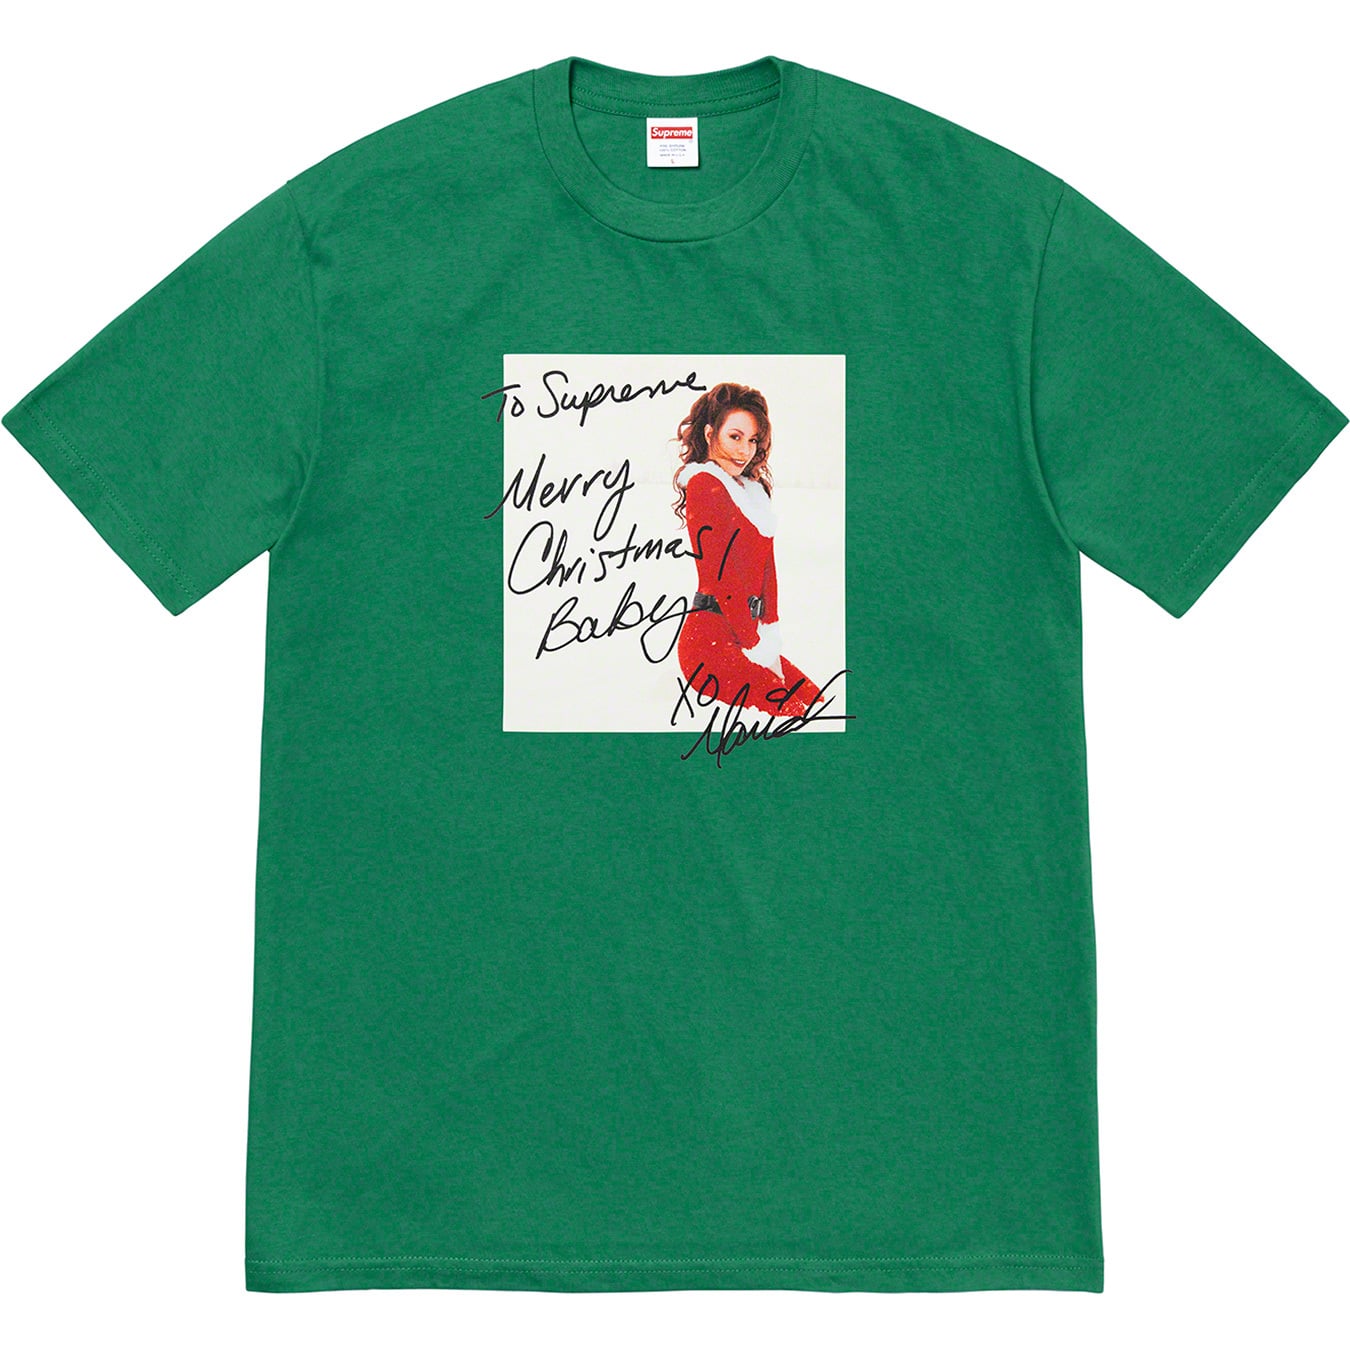 Where to Shop Supreme's Mariah Carey's Christmas T-Shirt | POPSUGAR Fashion